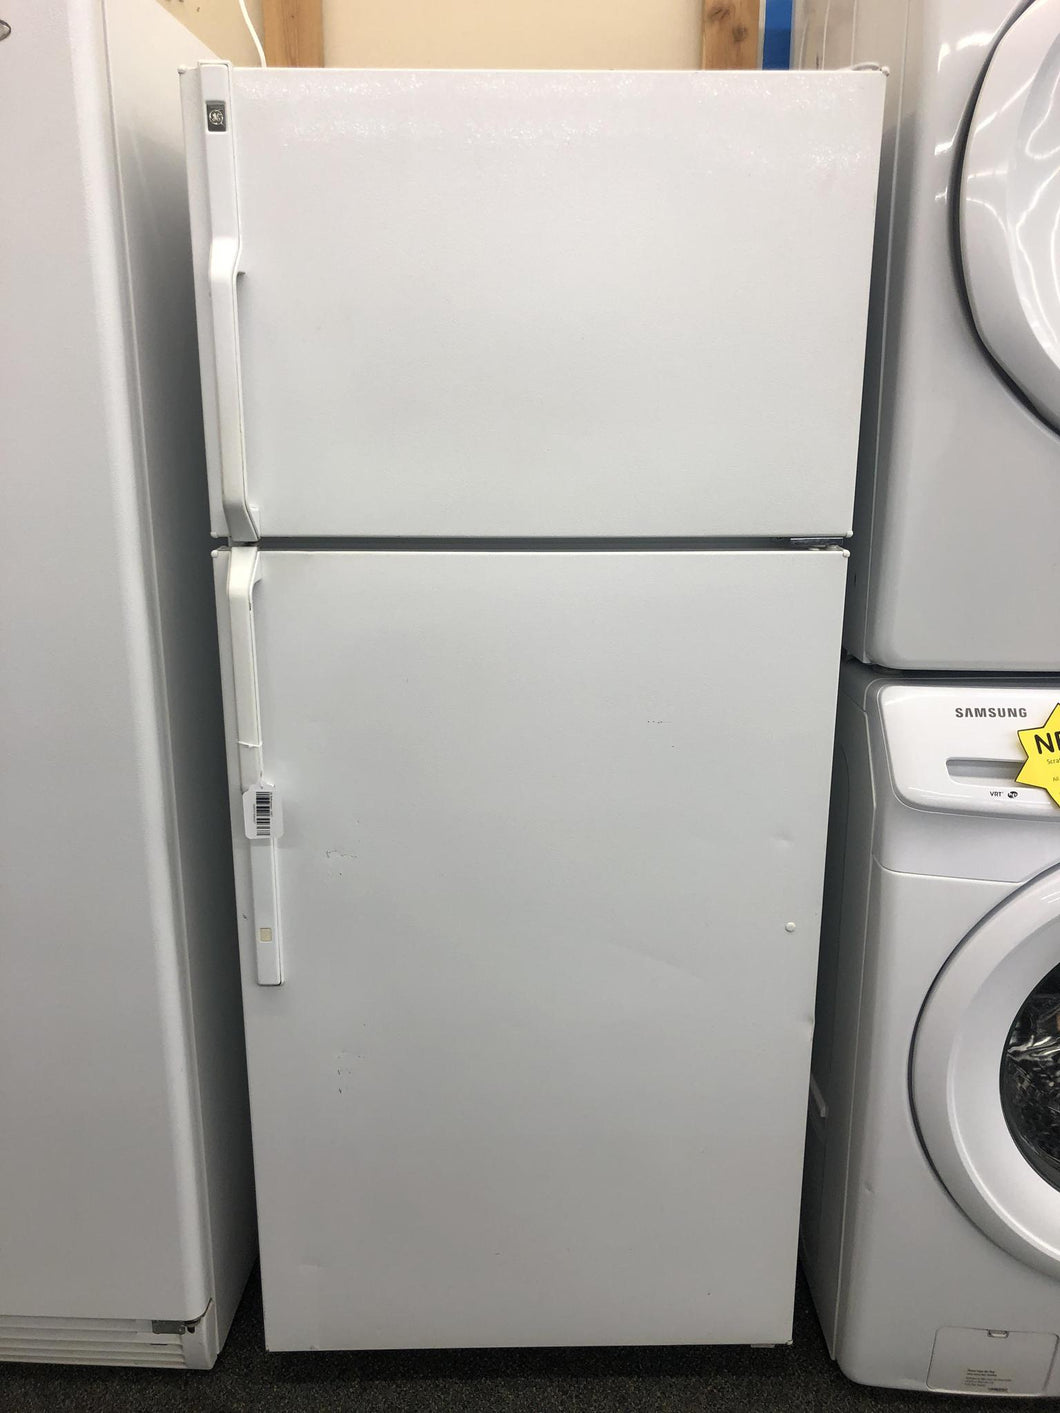 GE Refrigerator - 4367